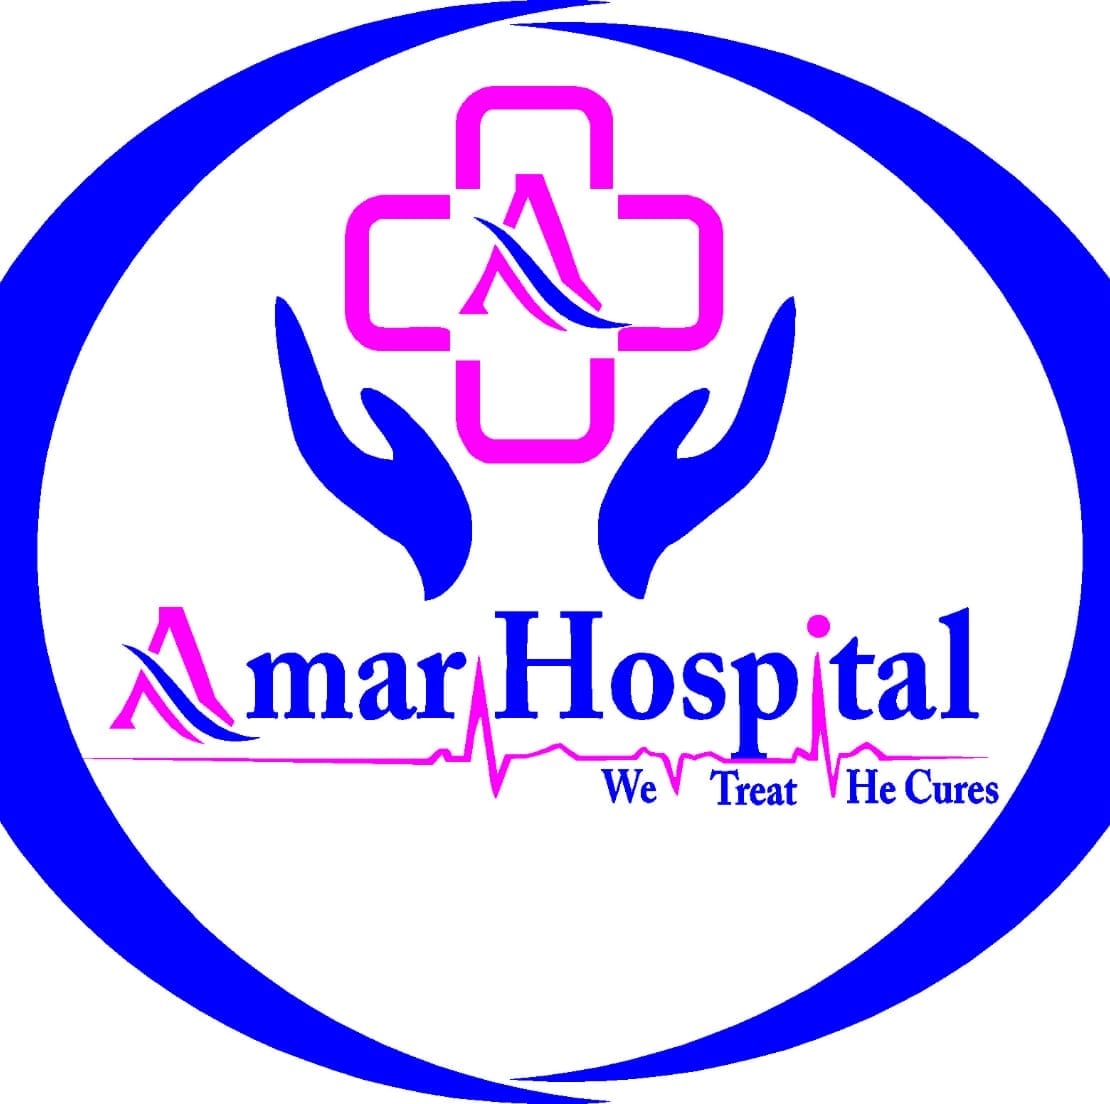 Amar Hospital|Hospitals|Medical Services